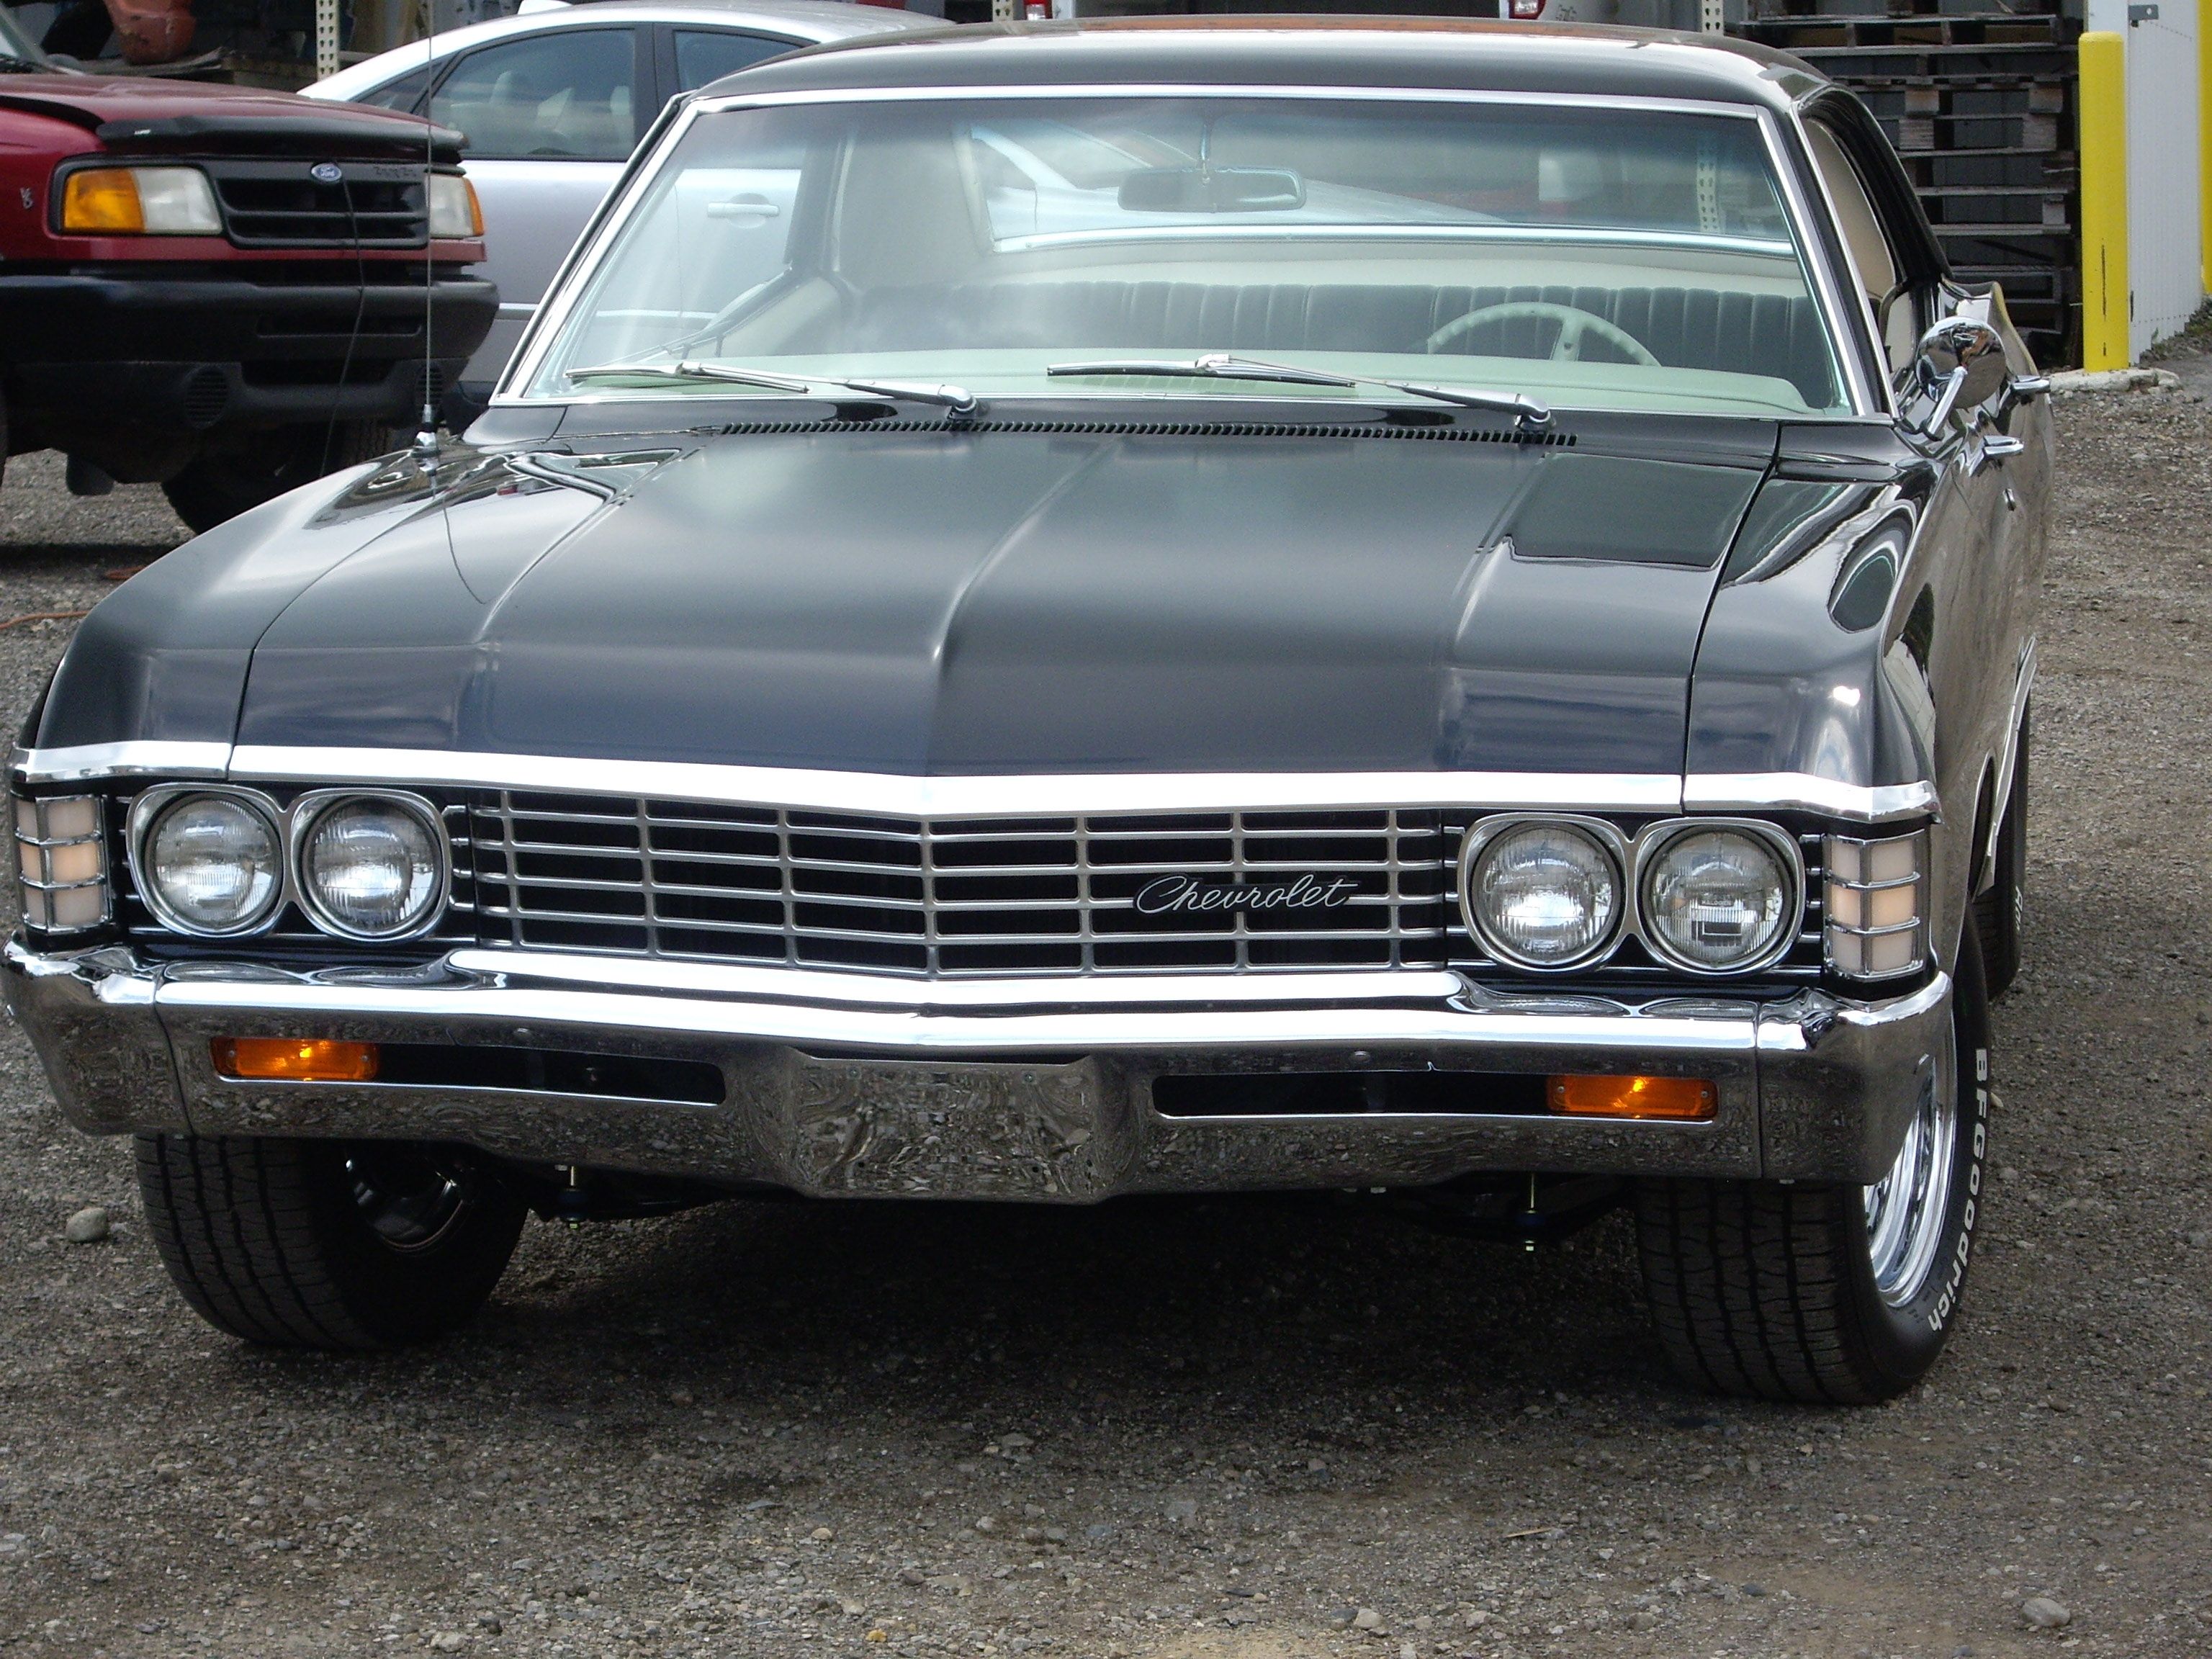 Chevrolet impala год. Шевроле Импала 1967. Shavrale Tempala 1967. Chevrolet Impala 67. Шевроле Импала 1967 черная.